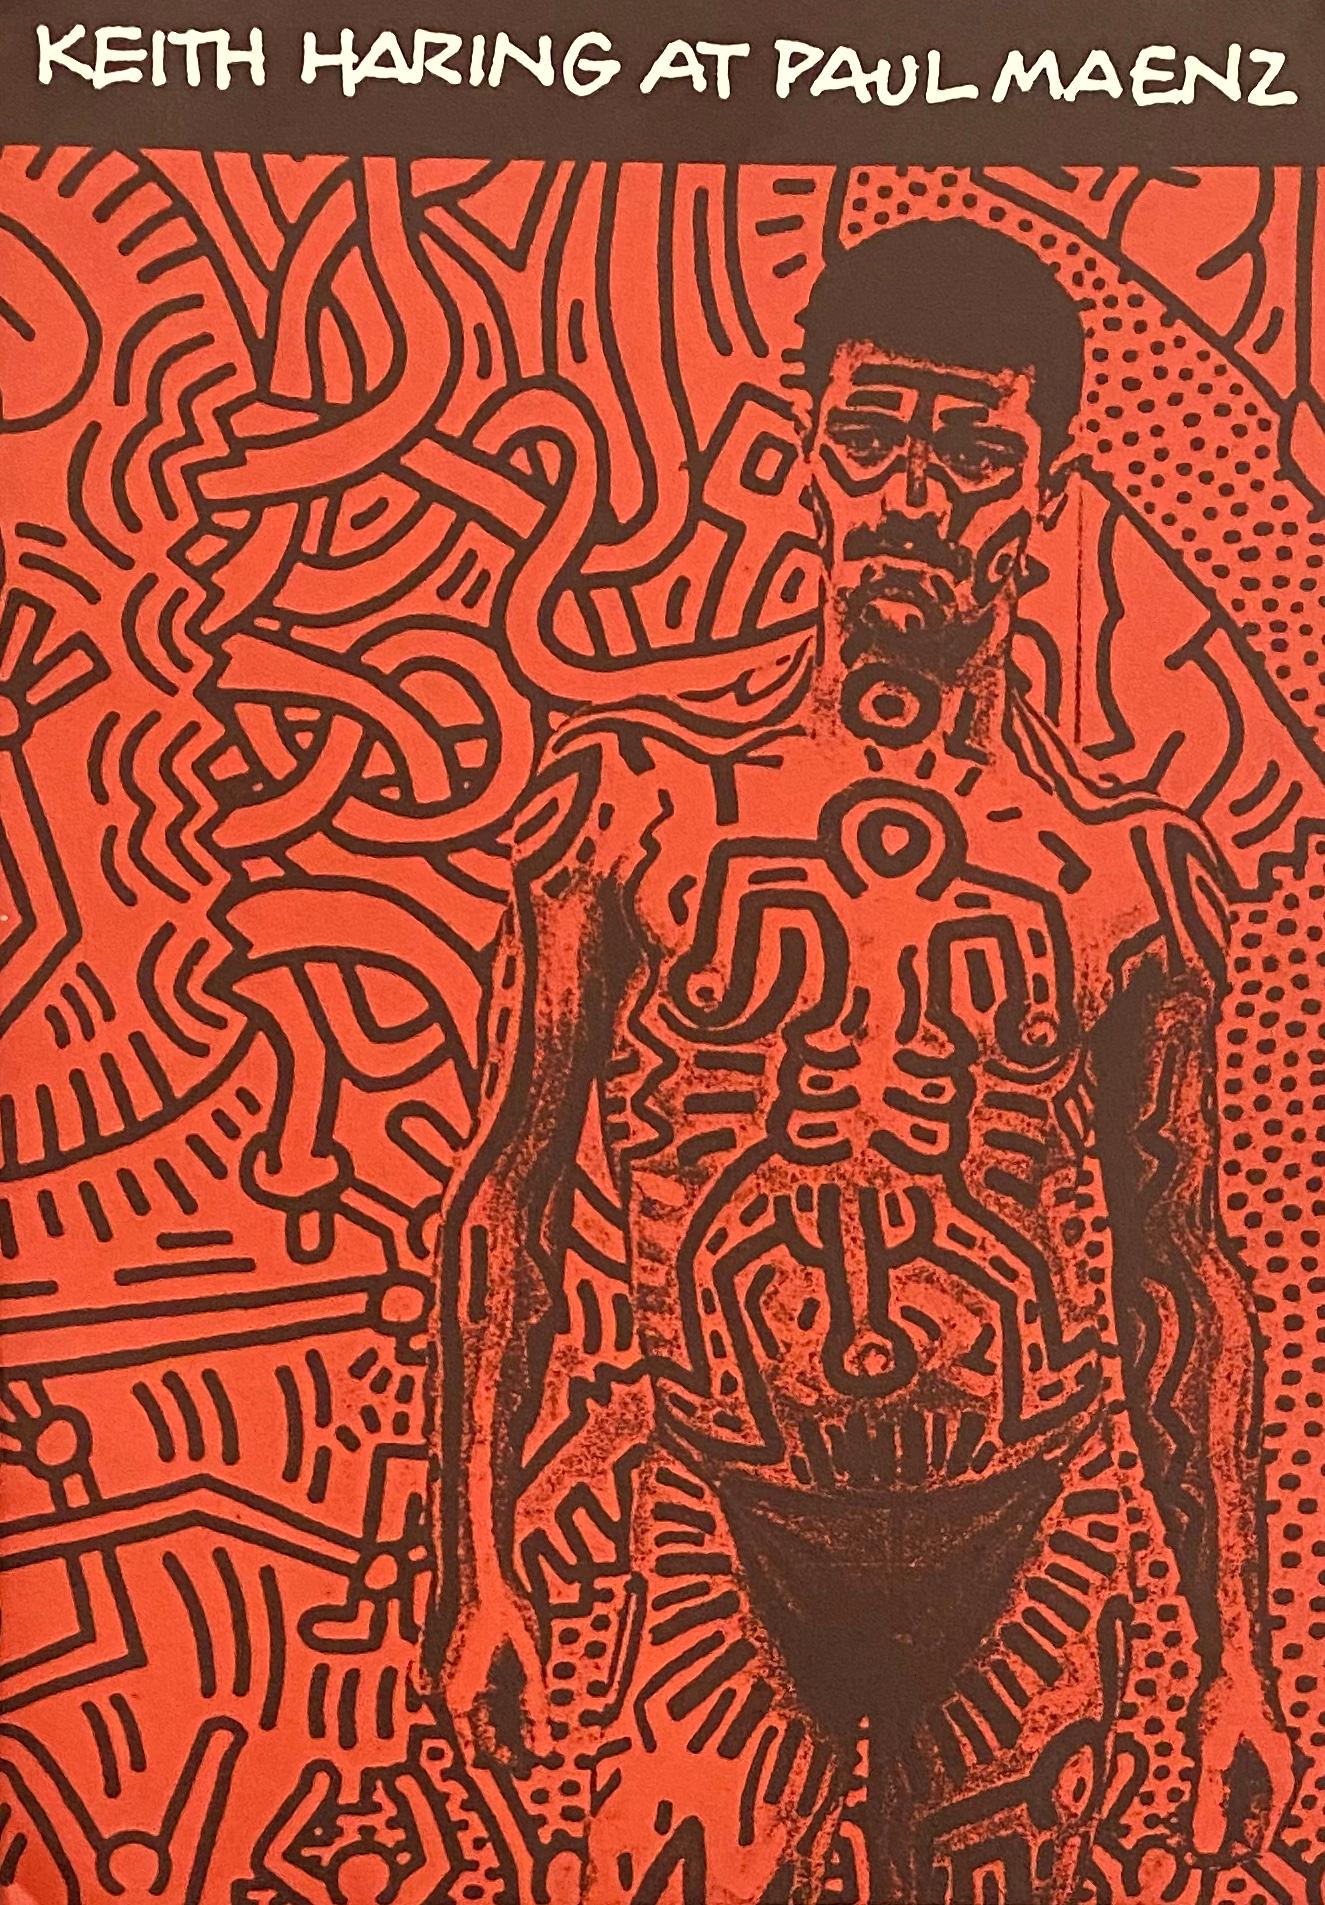 Keith Haring 1984 Paul Maenz catalog (vintage Keith Haring)  - Pop Art Print by (after) Keith Haring